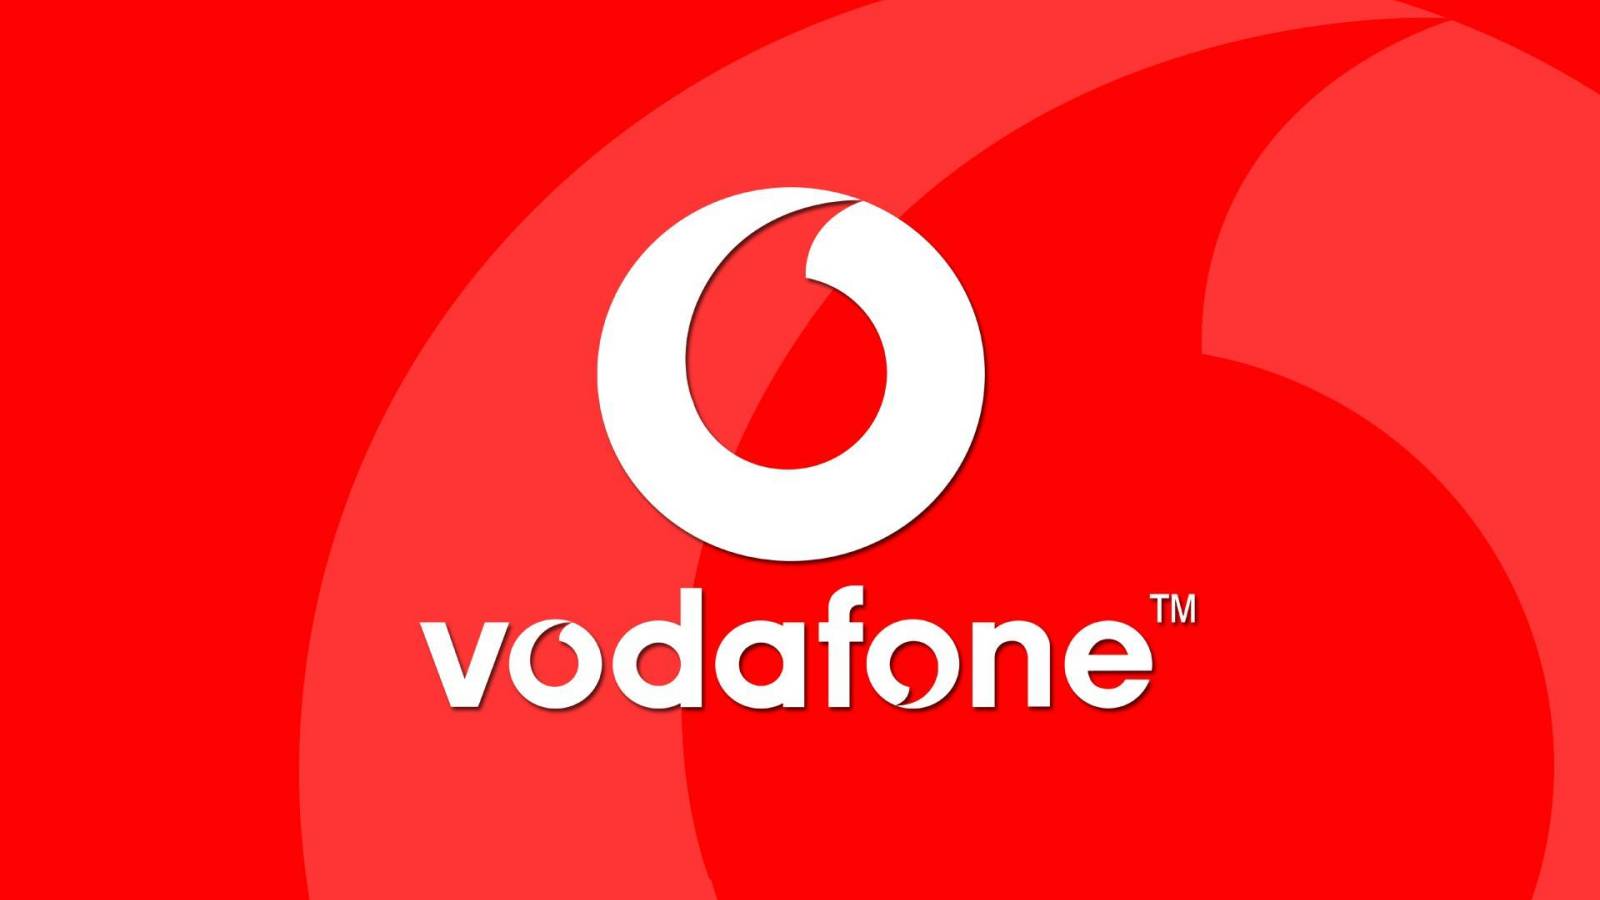 Vodafone oscar